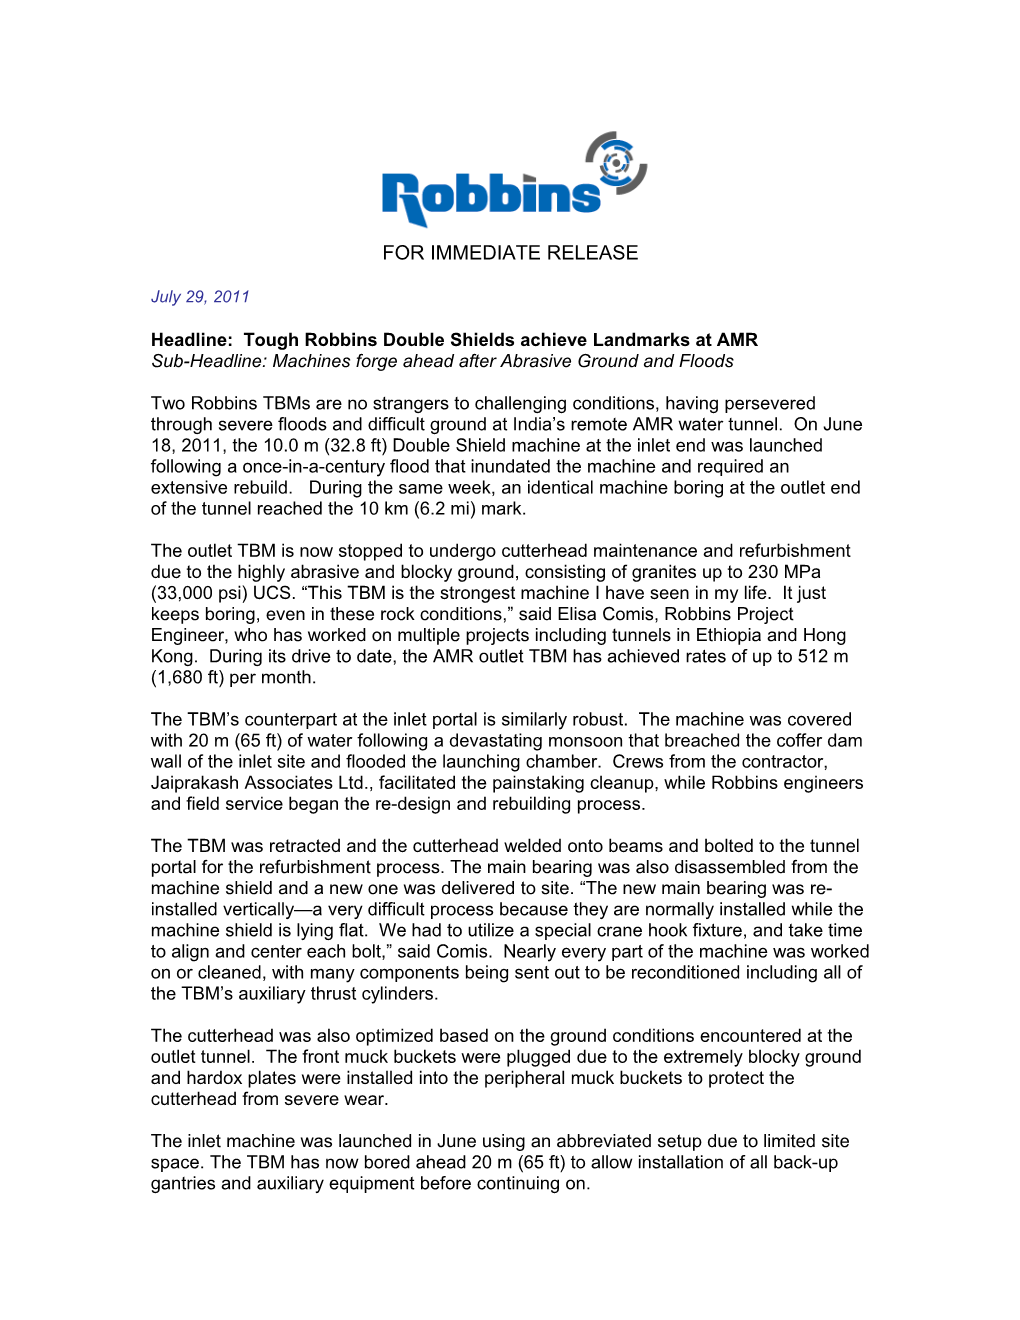 Headline: Tough Robbins Double Shields Achieve Landmarks at AMR